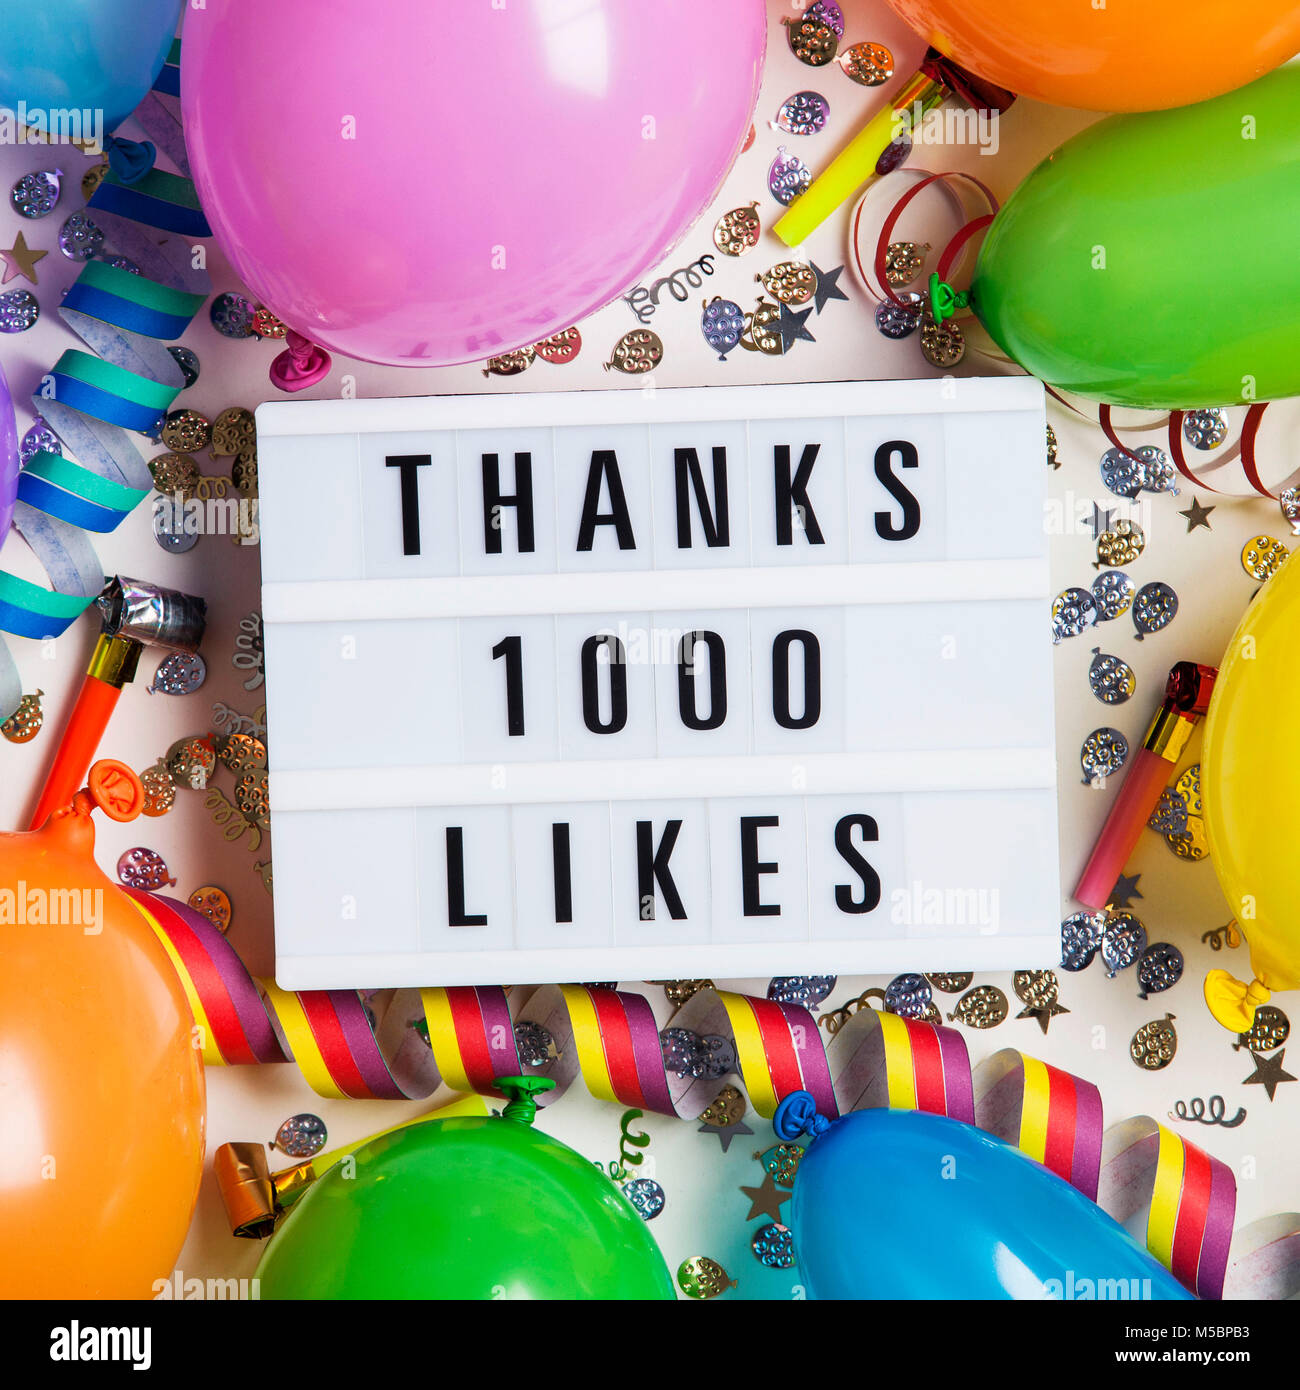 Thanks 1 thousand likes social media lightbox background. Celebration of followers, subscribers, likes. Stock Photo